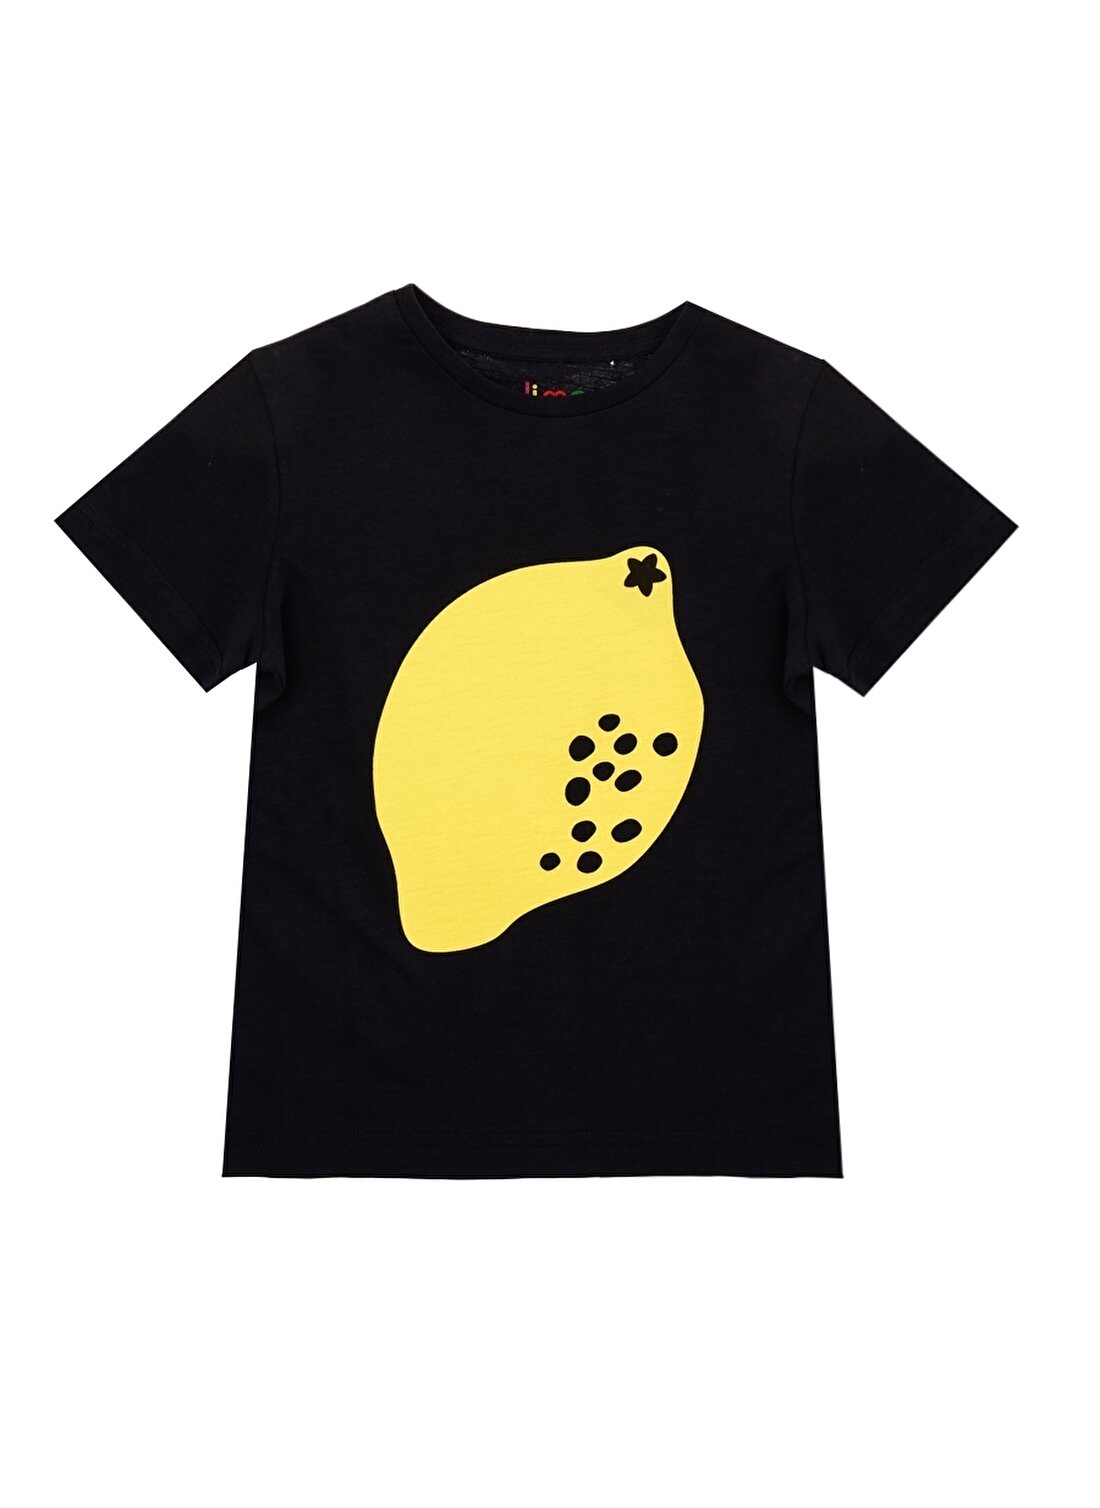 Limon T-Shirt